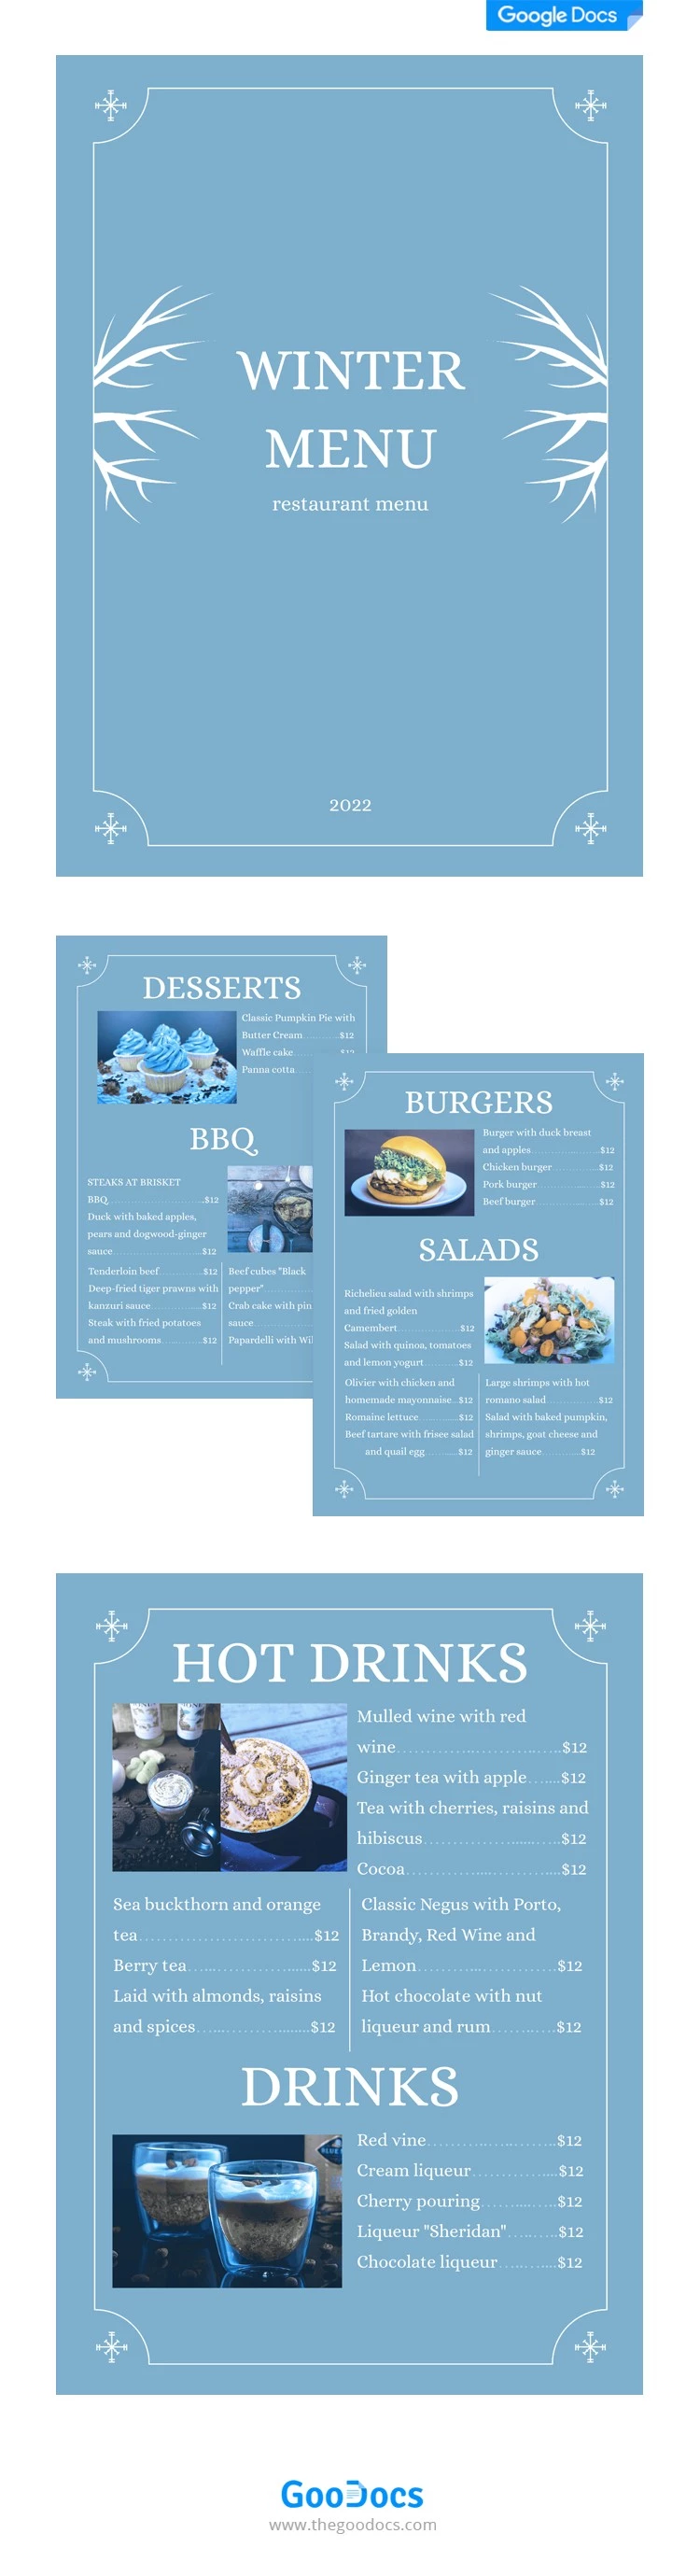 Winter Restaurant Menu - free Google Docs Template - 10062074